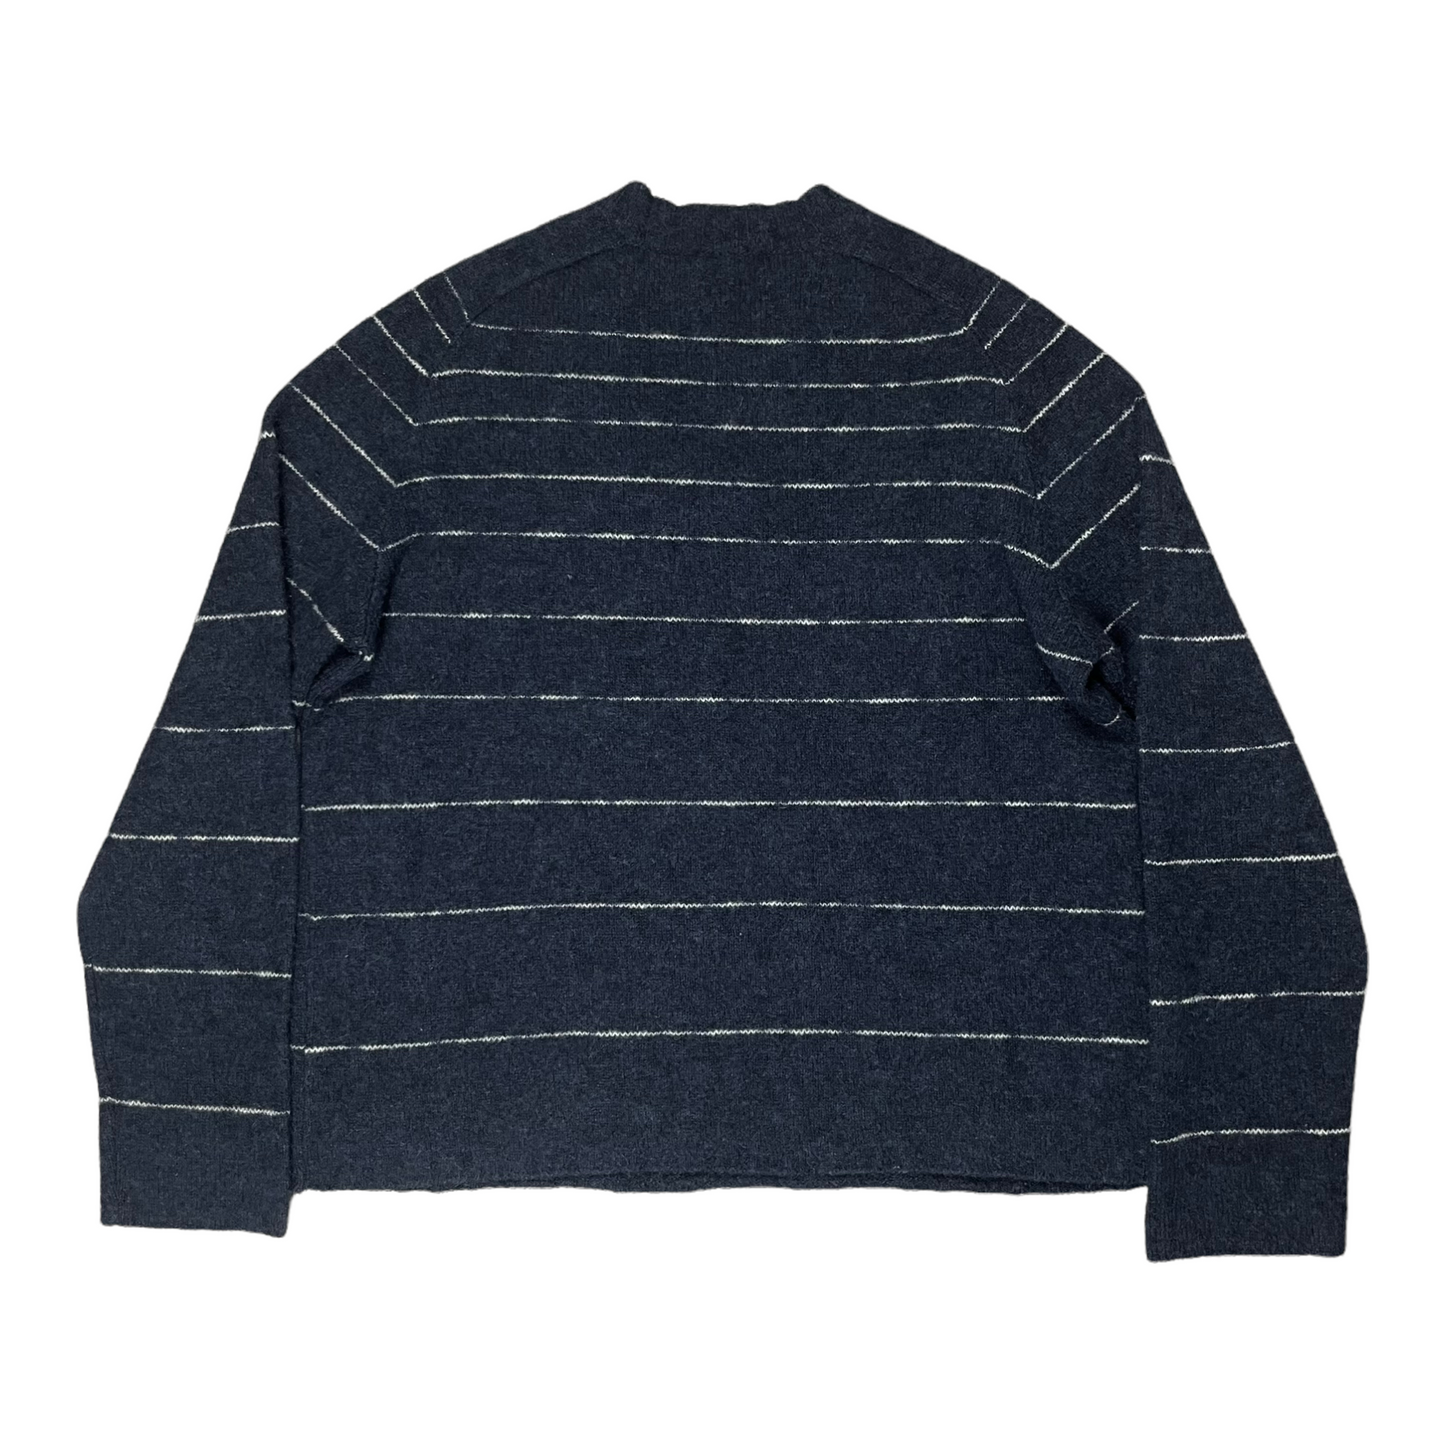 Dries Van Noten Striped Wool Sweater